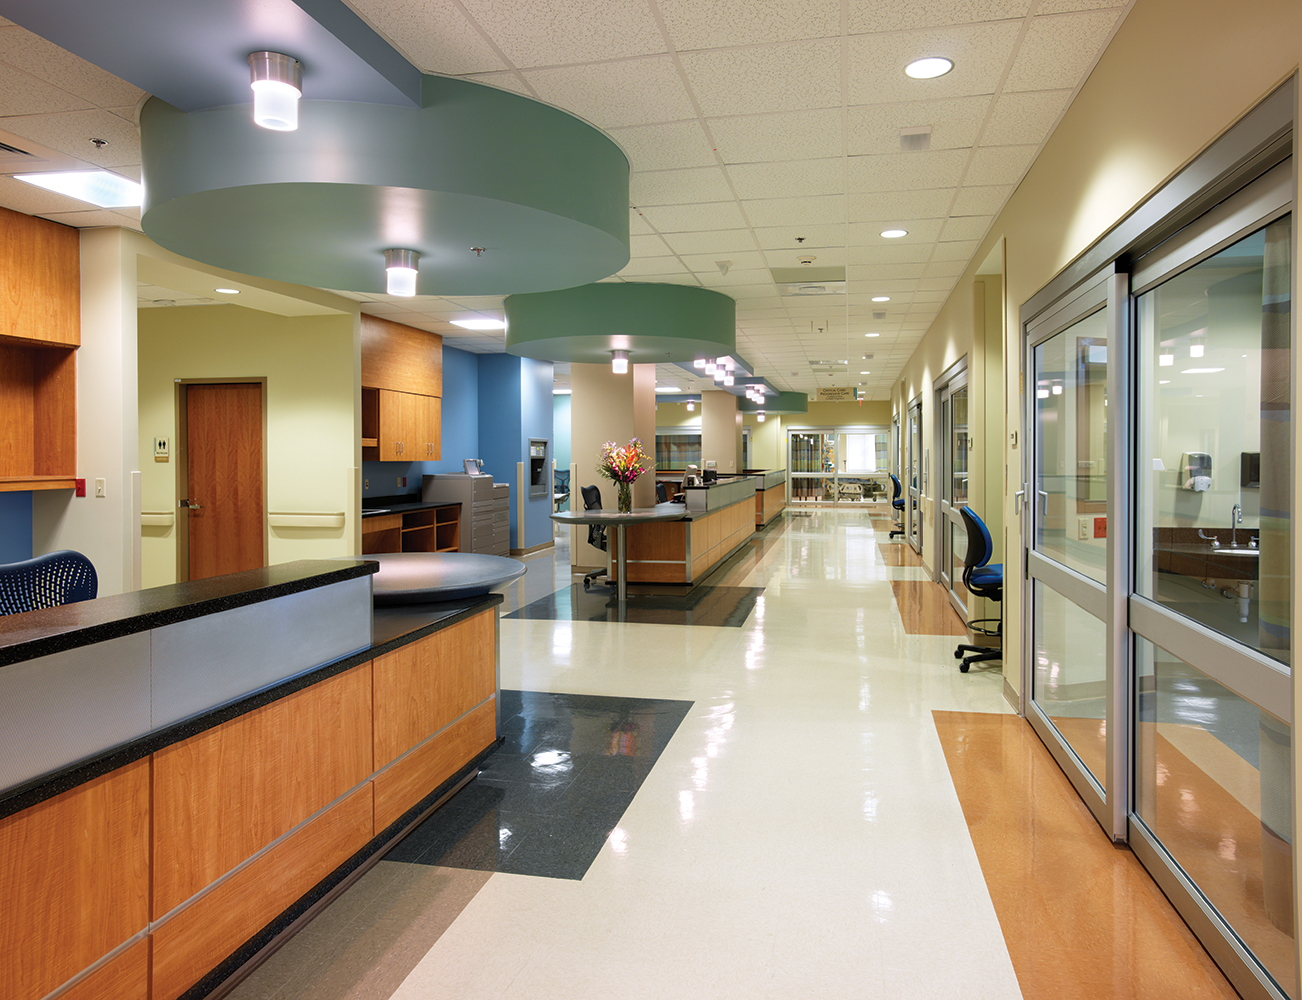 Cane ceiling luminaires in a clean hospital design illuminate a nurse's station.